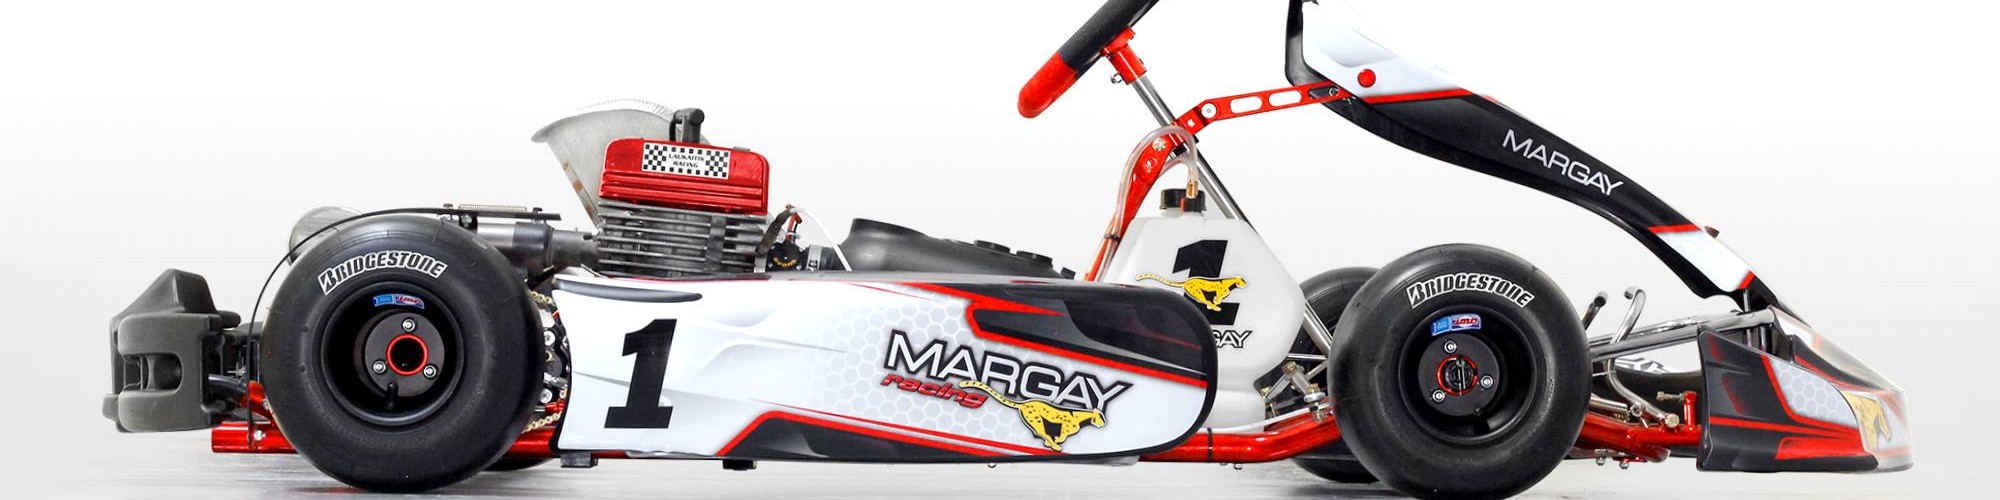 Margay Racing, LLC 